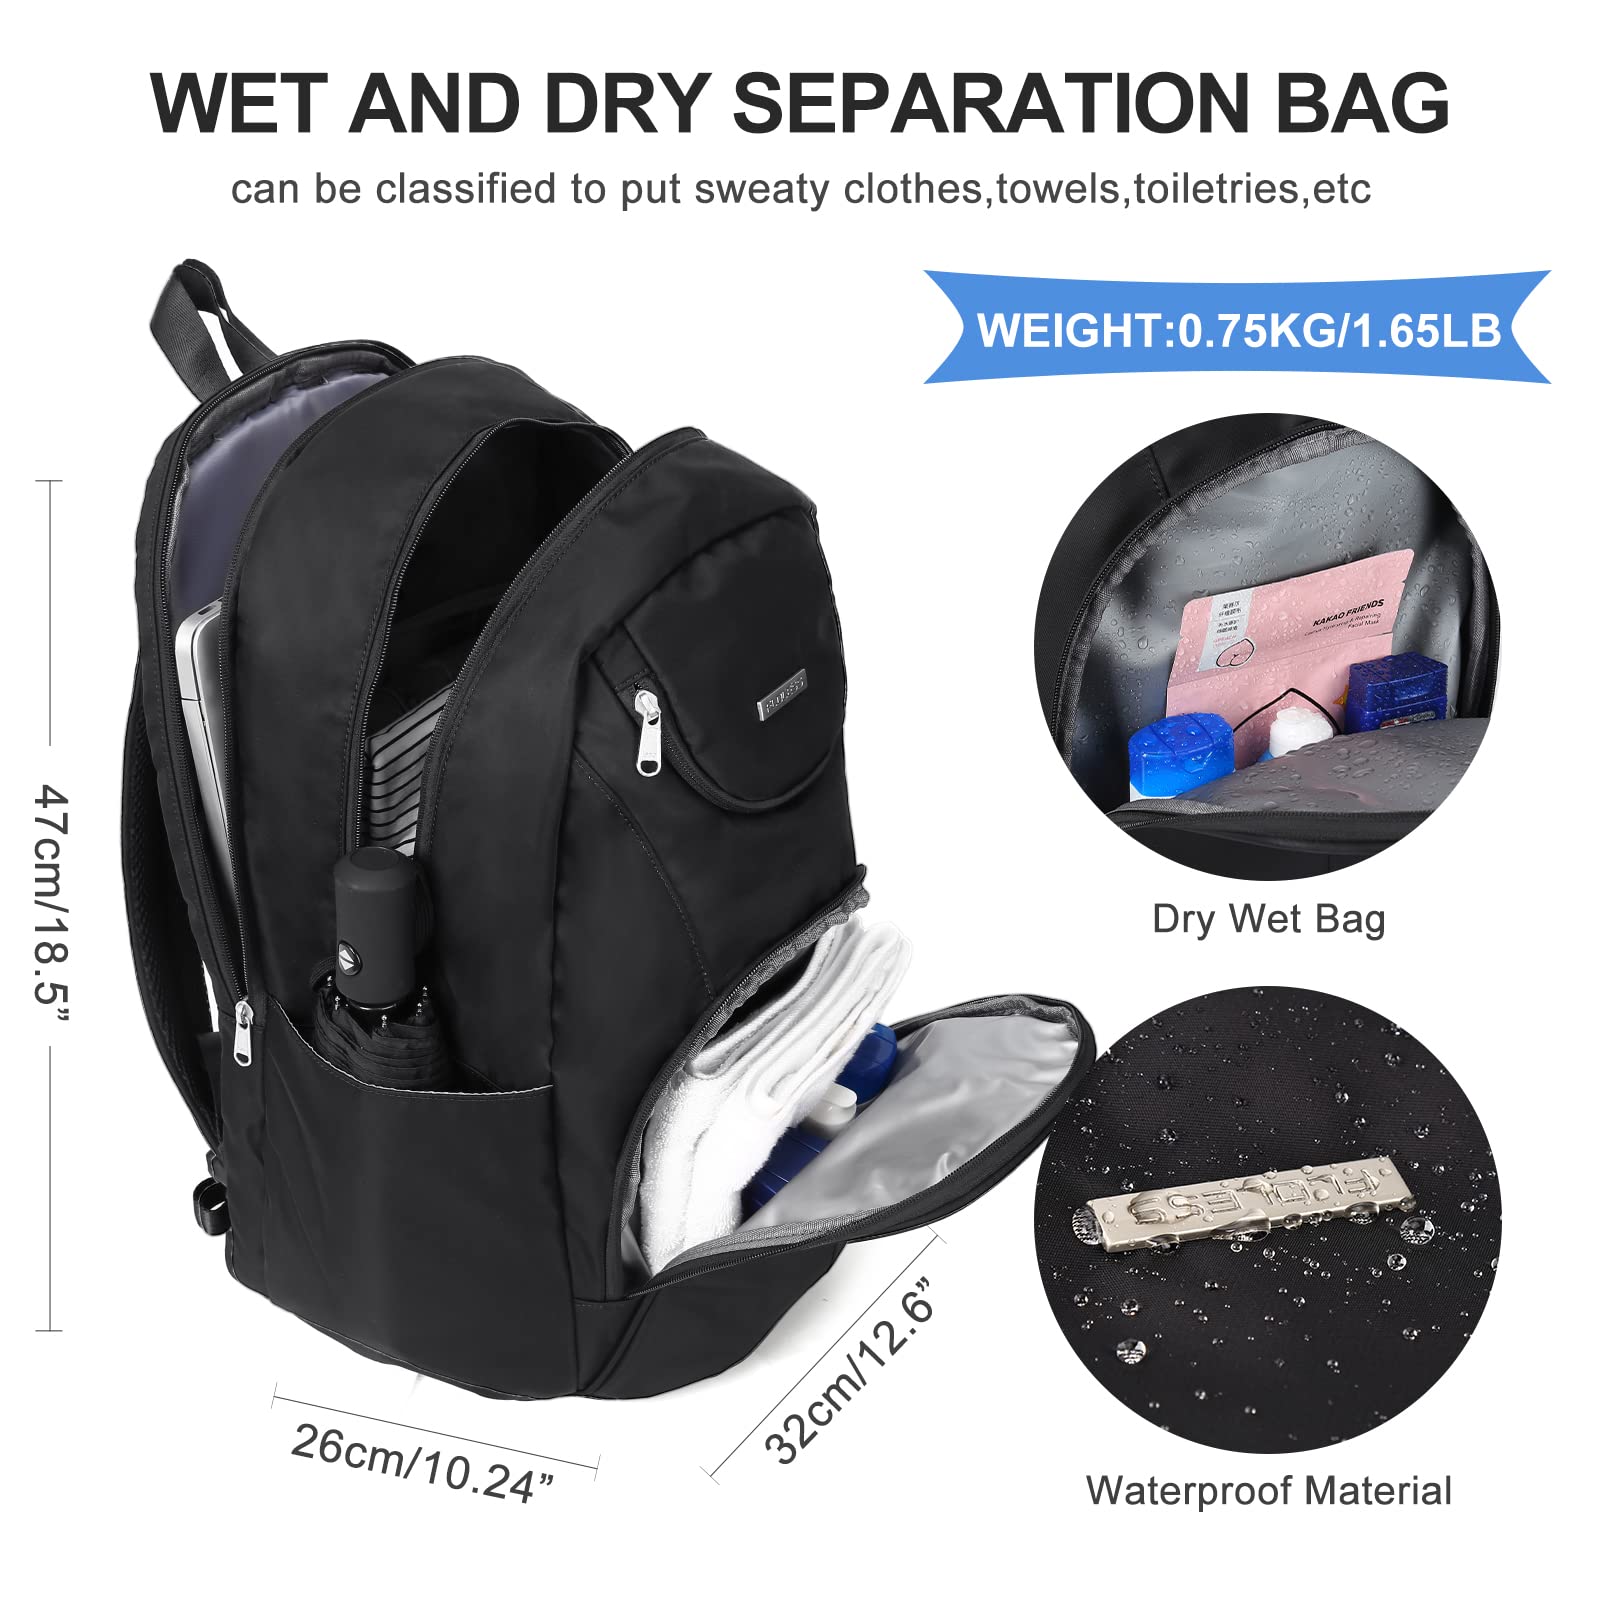 Large Travel Backpack Women, Carry On Backpack,Hiking Backpack Waterproof Outdoor Sport Rucksack Casual Daypack School Bag …